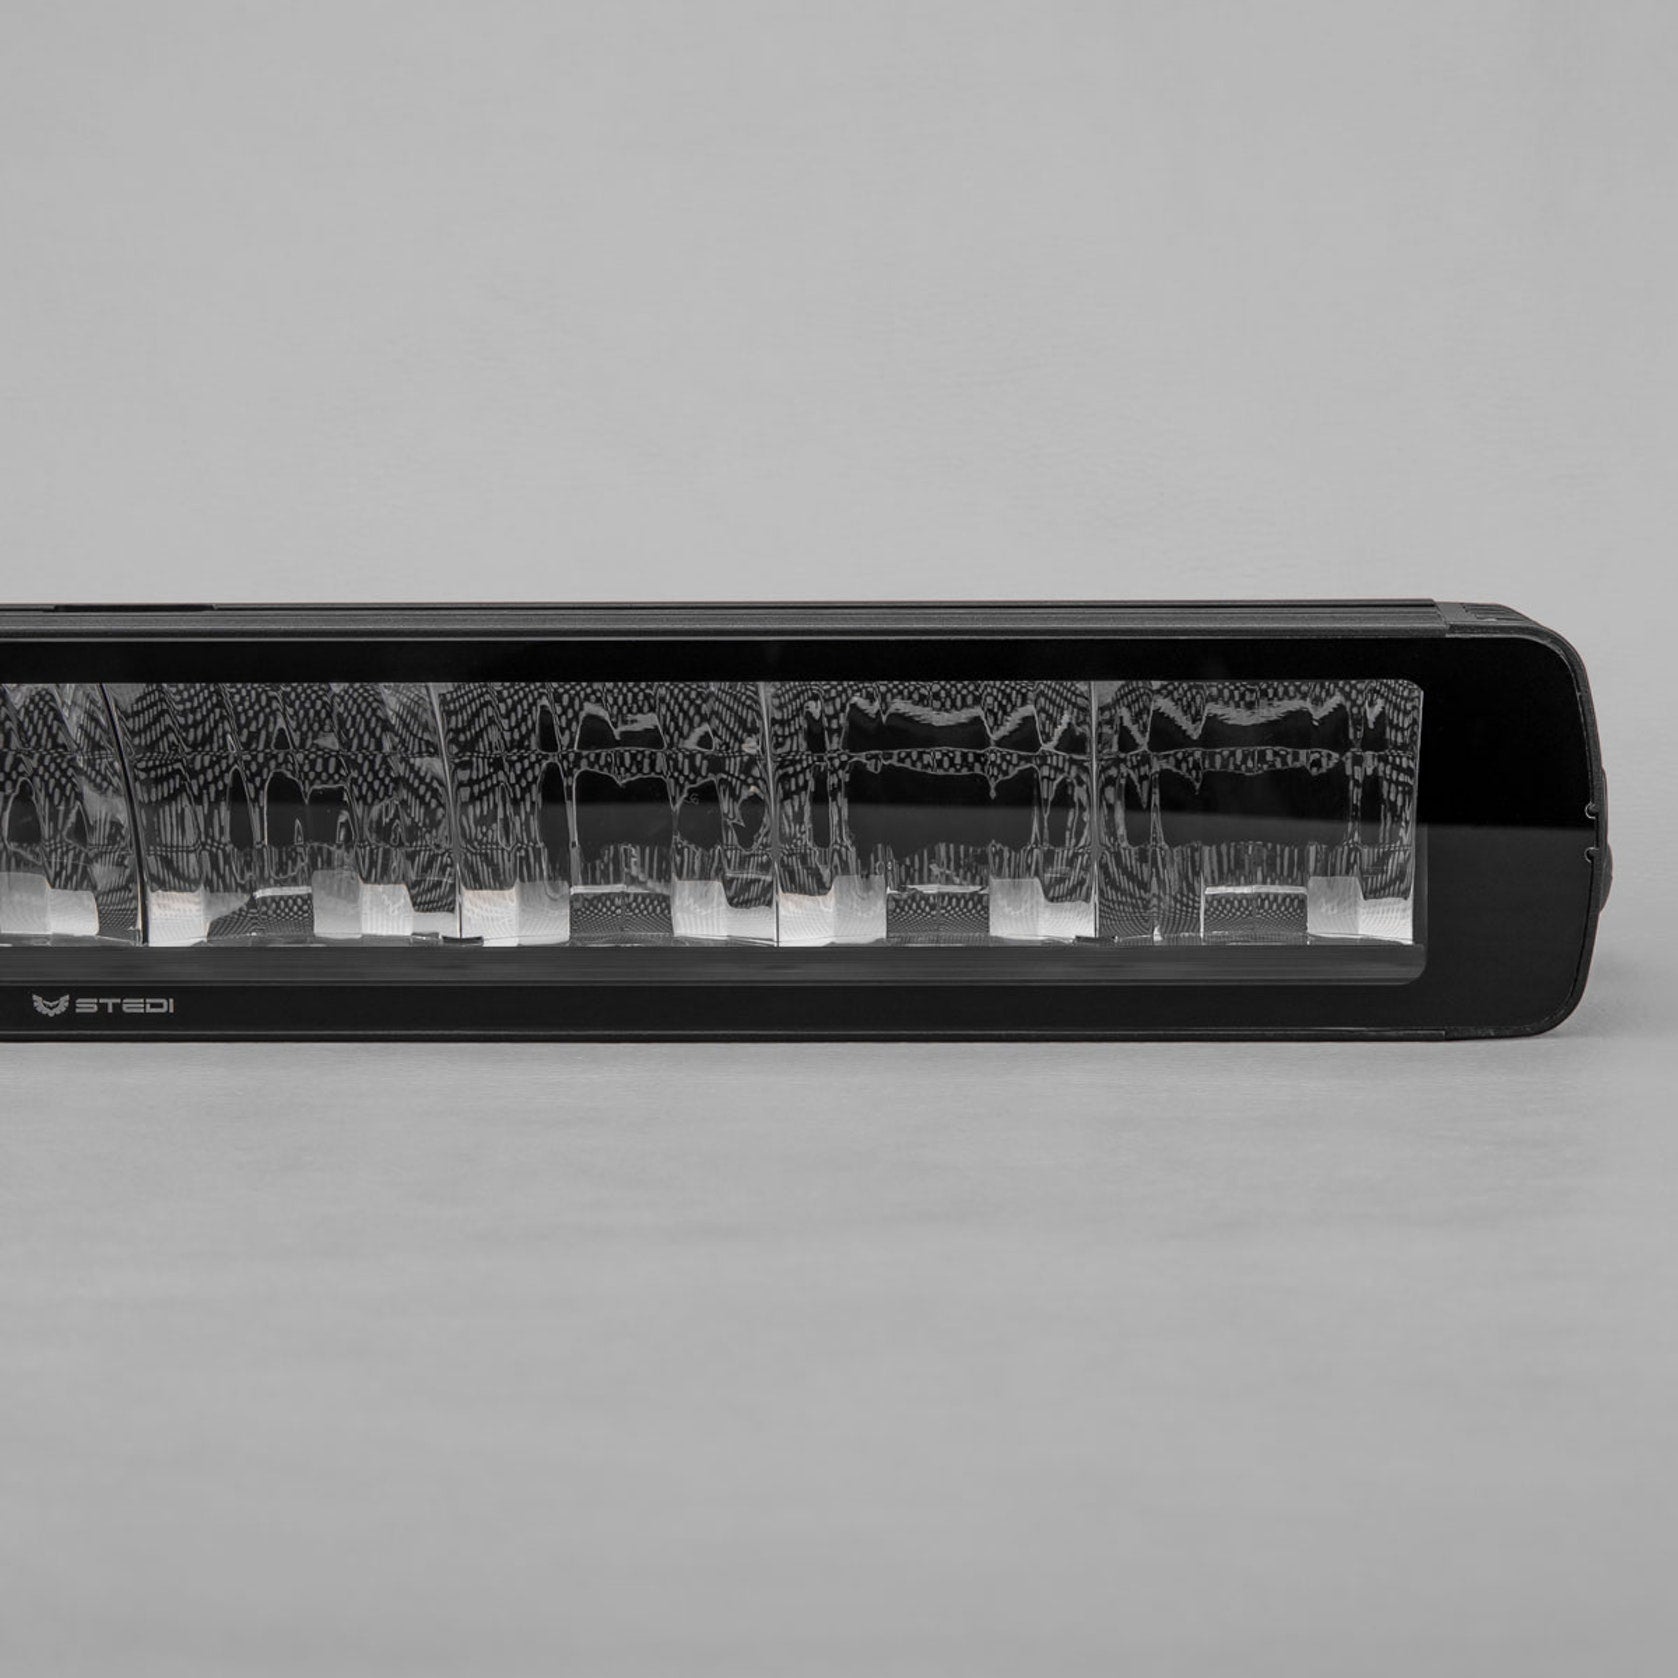 STEDI ST-X 21.5" LED Light Bar